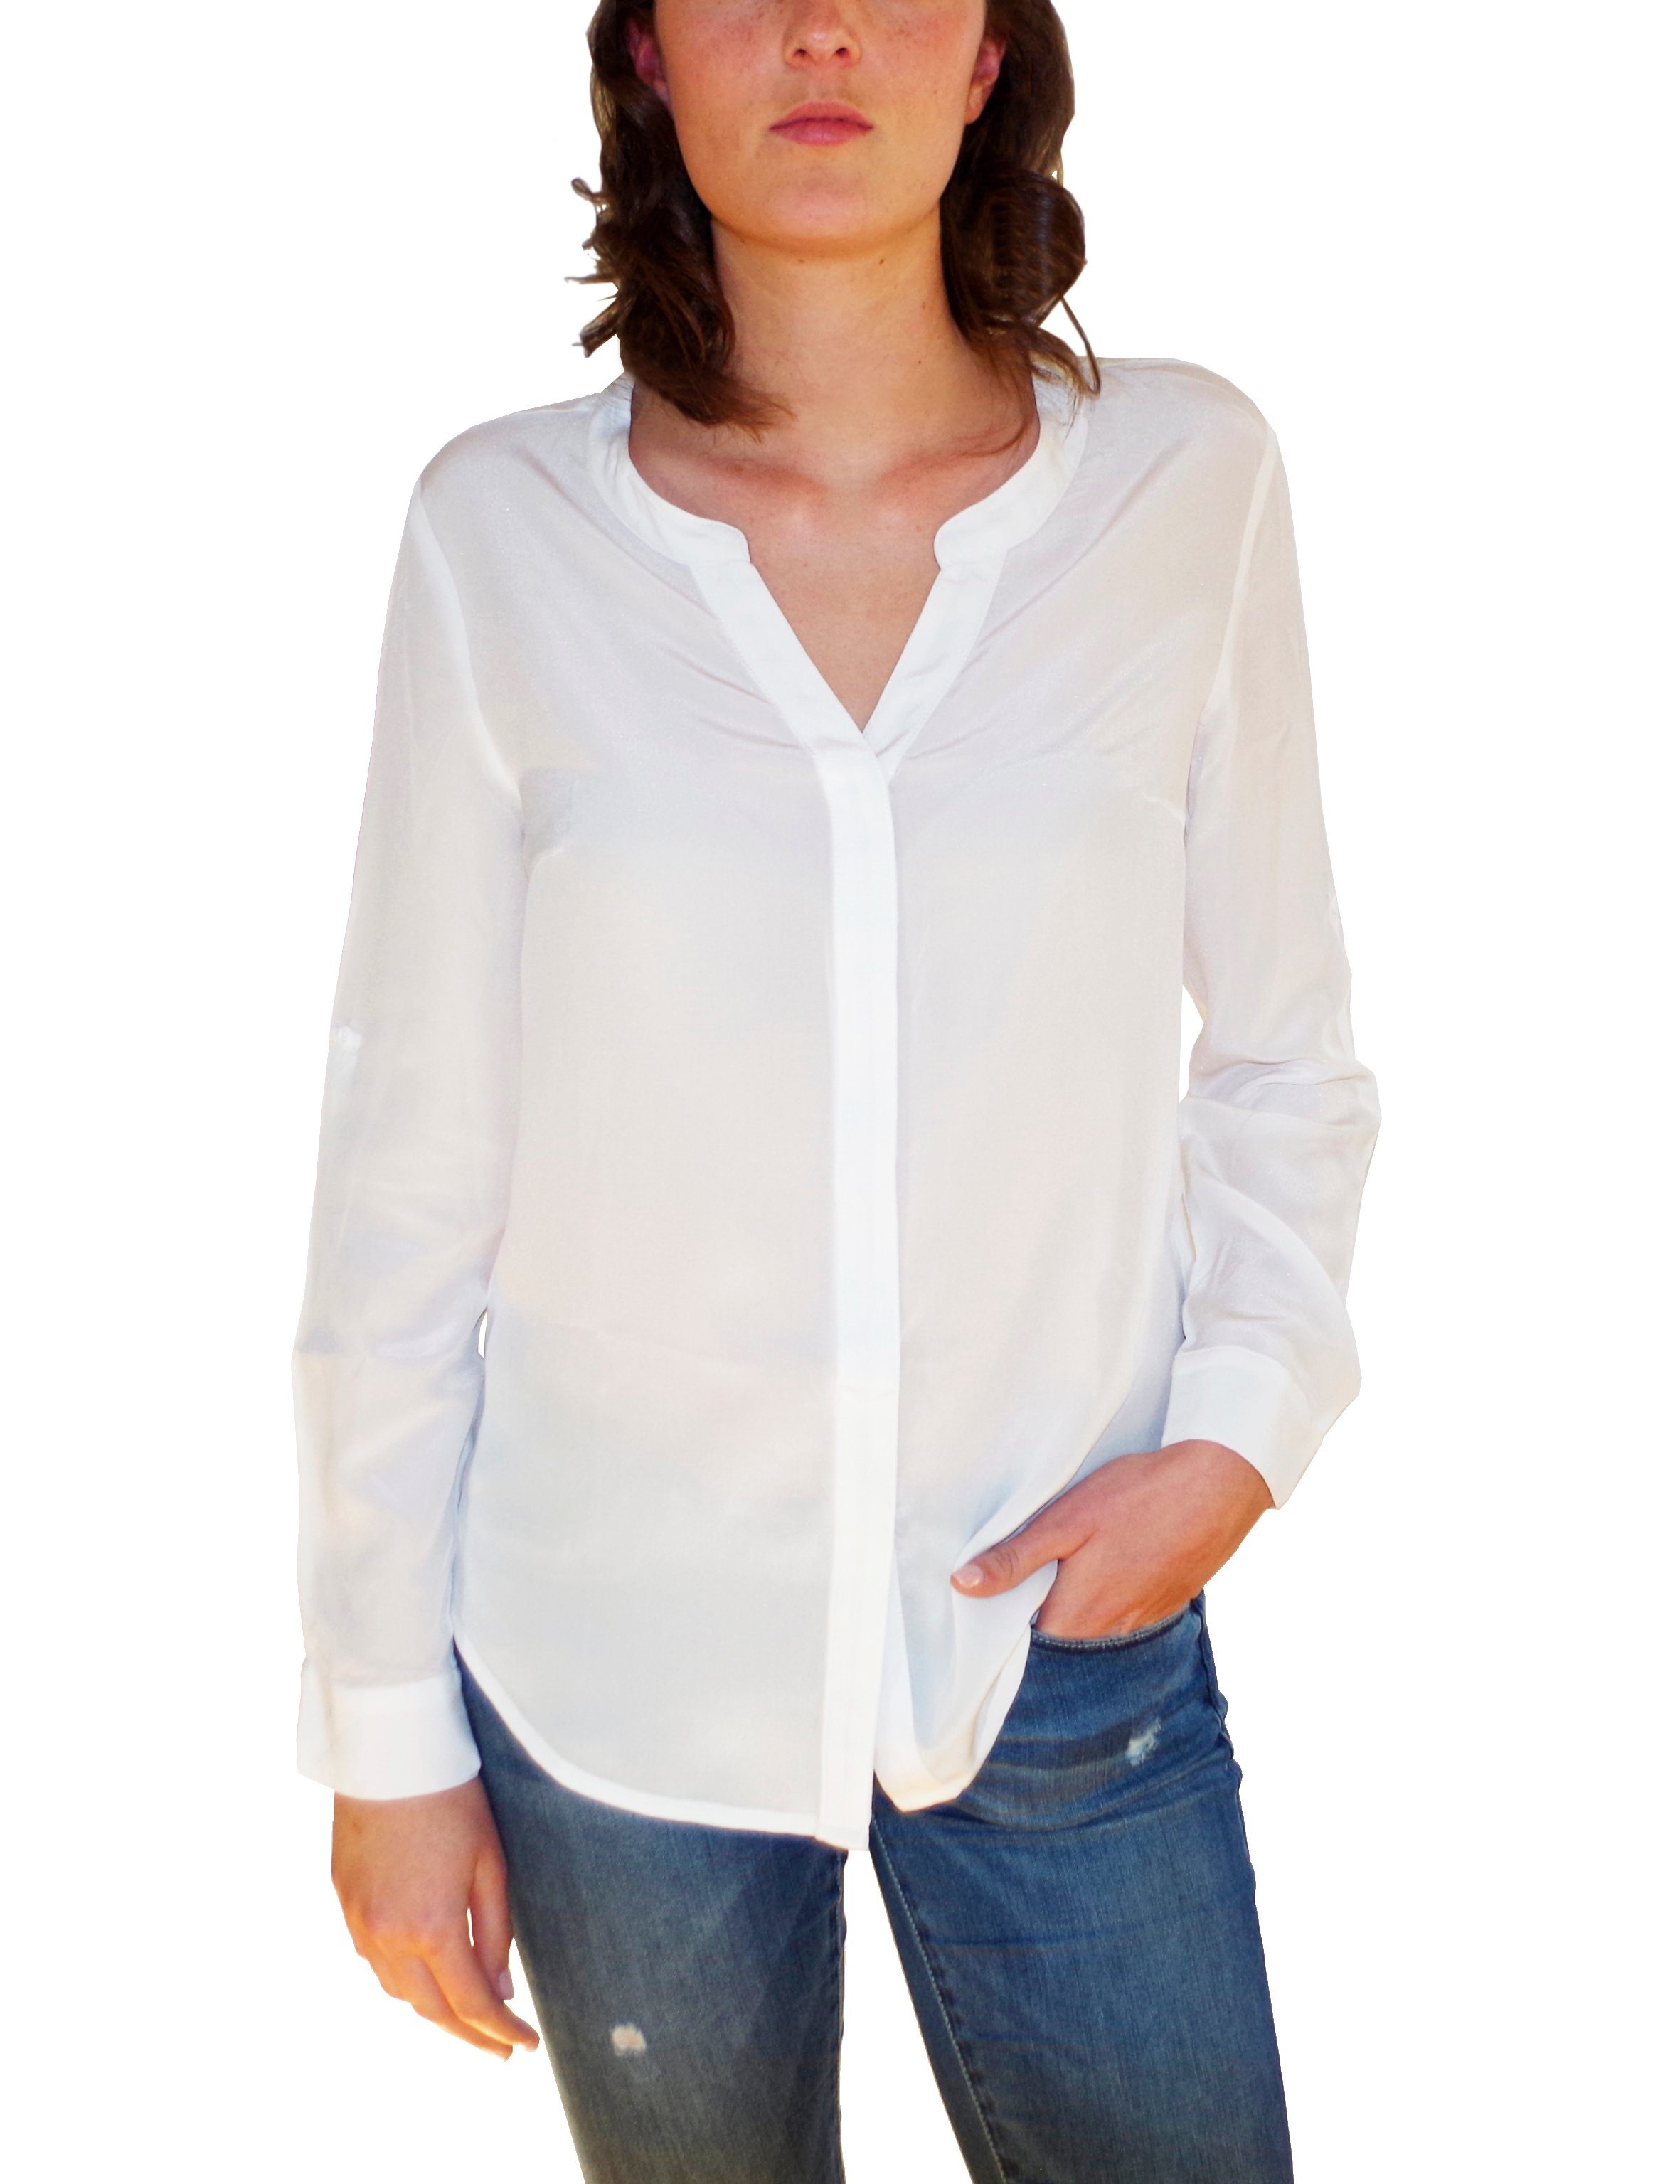 Posh Gear Seidenbluse Damen Bluse Camicetta aus 100% Seide weiß